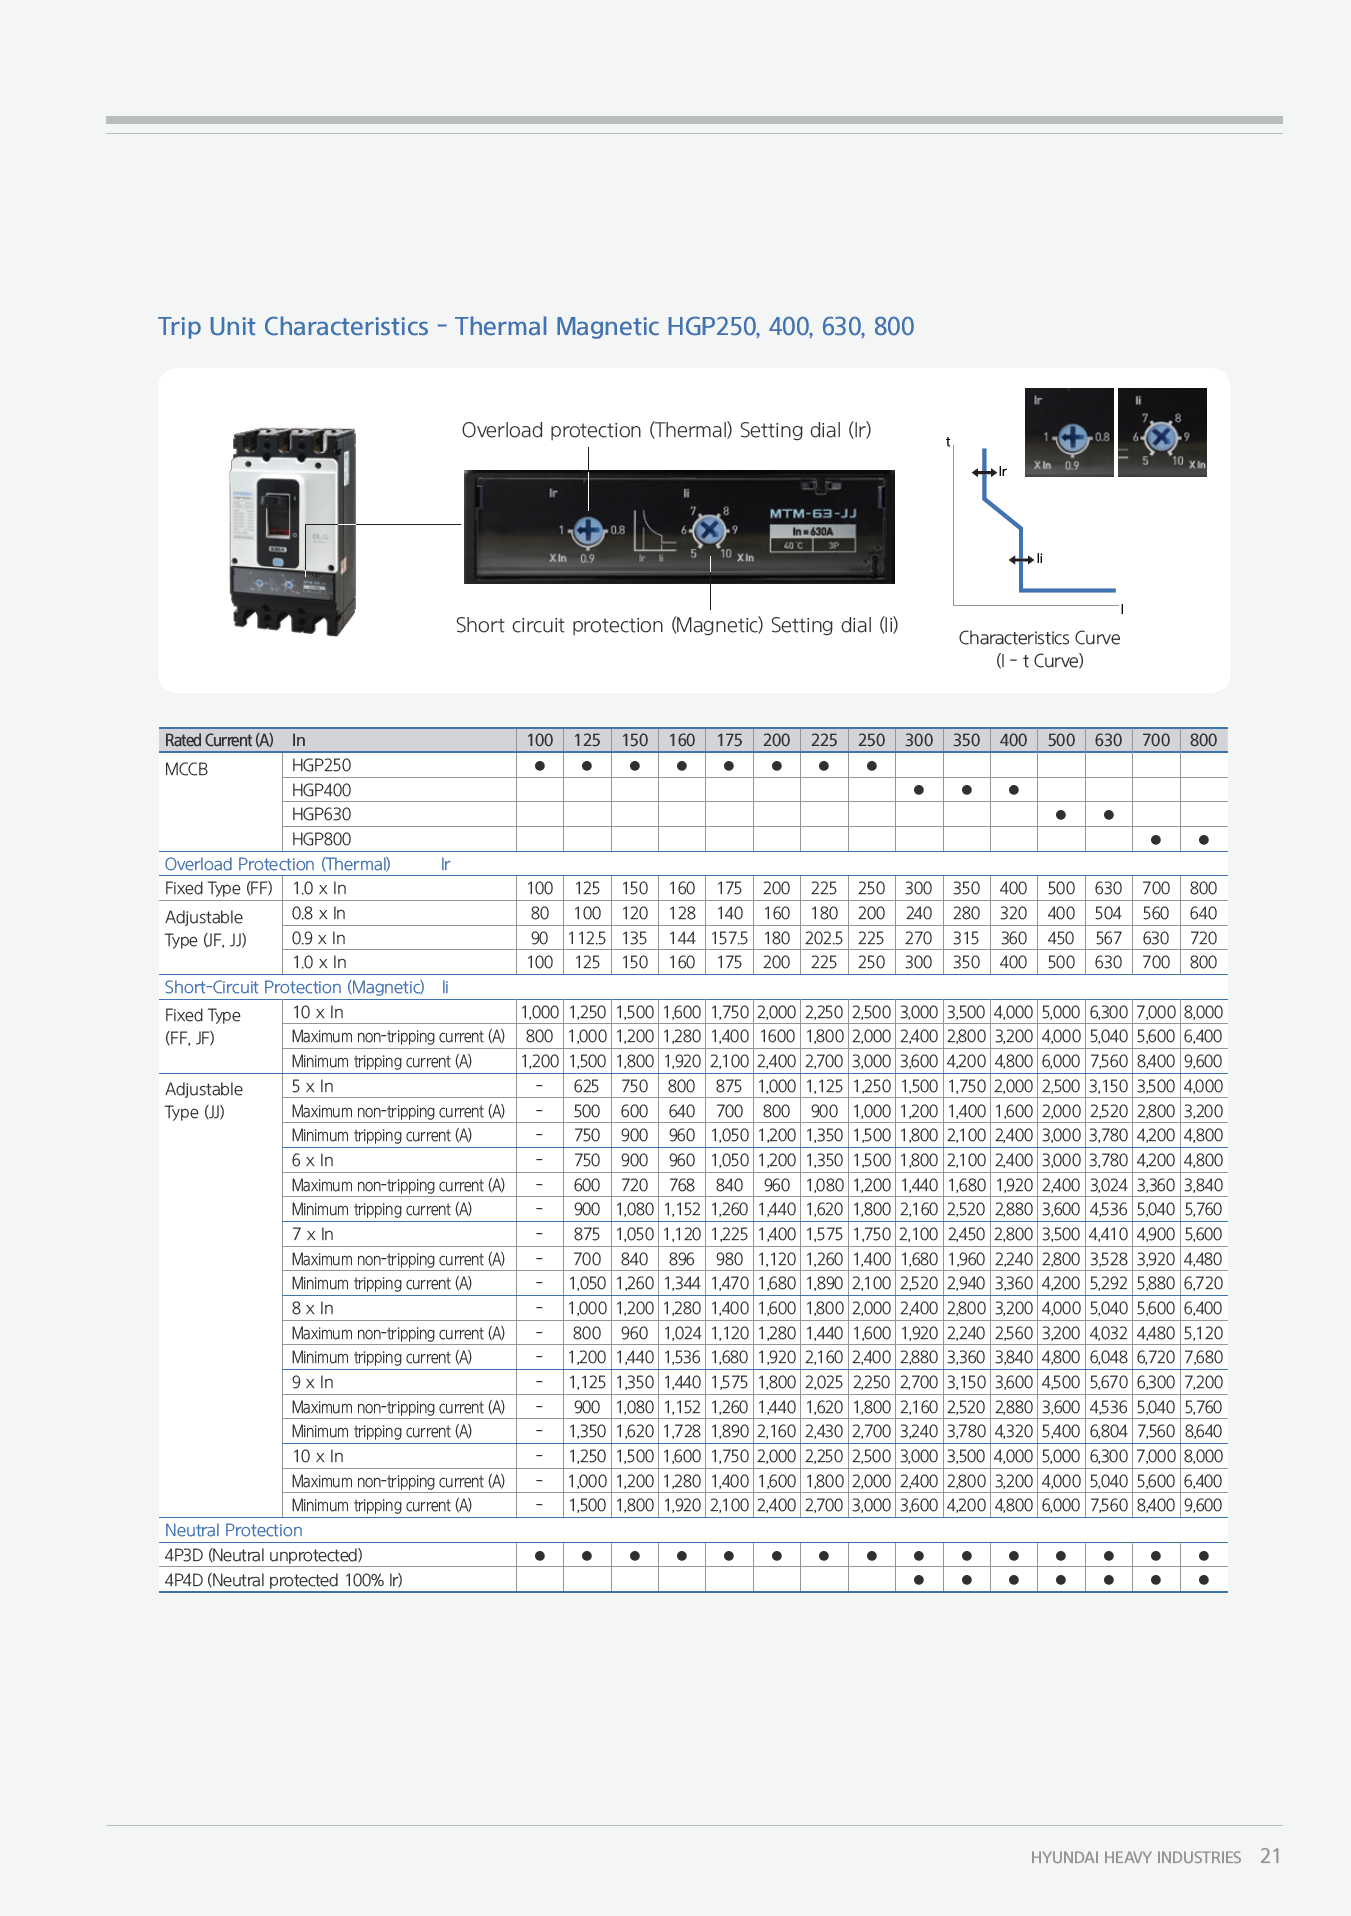 Hyundai Marine Circuit Breaker (MCCB) - HGP250X 3P Fixed / Plug-in Type